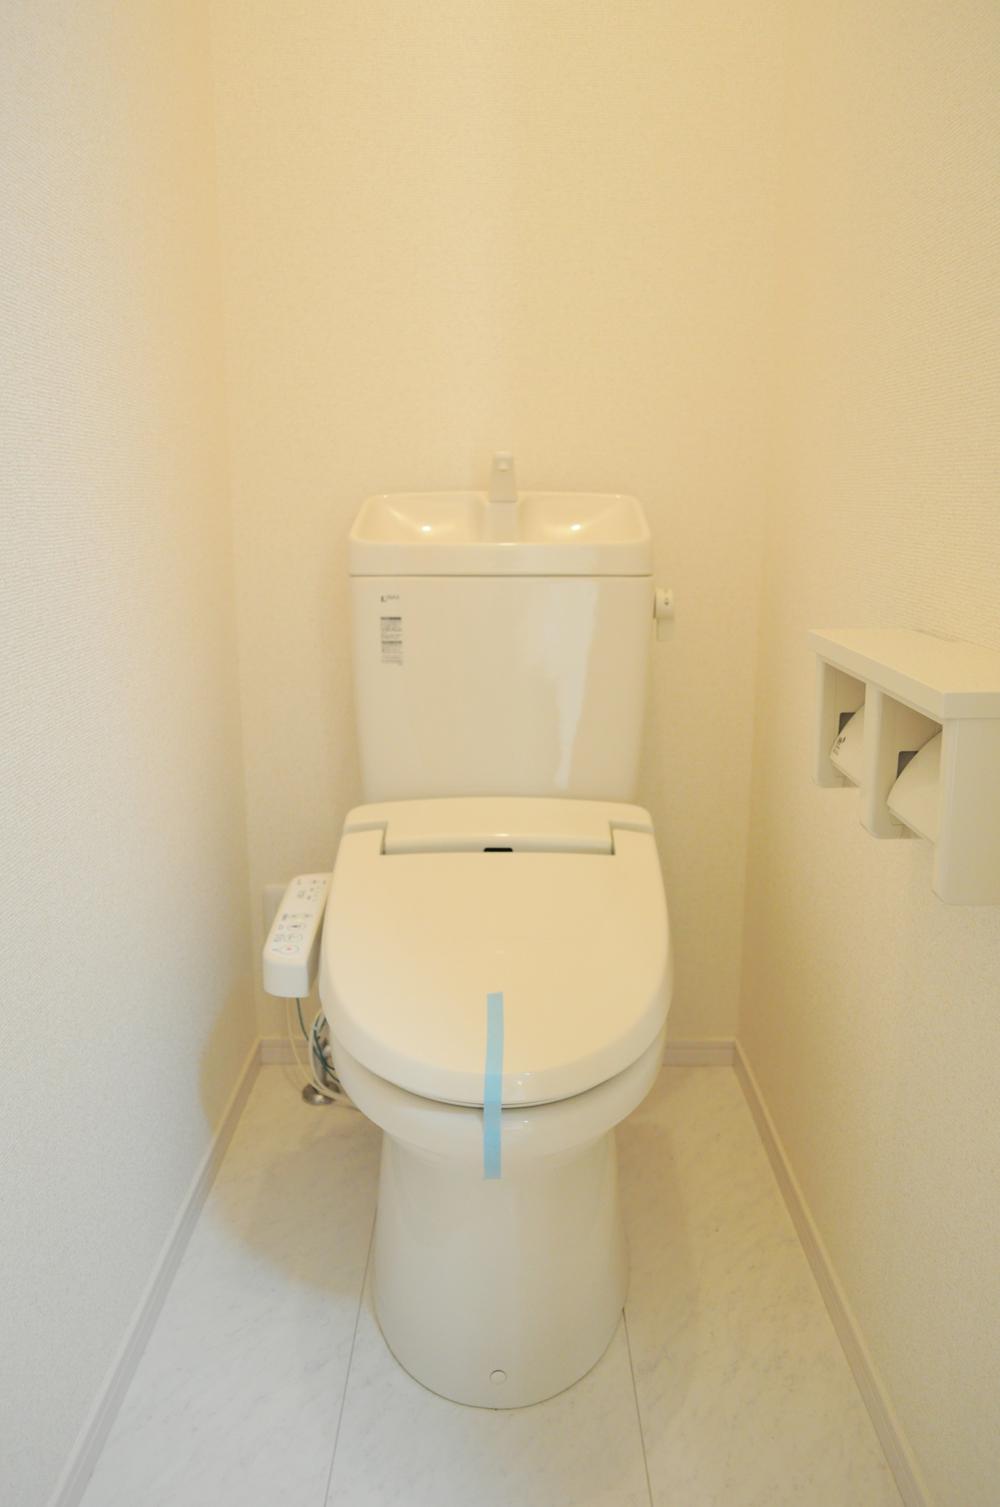 Toilet. Cleaning settled (December 2013) Shooting